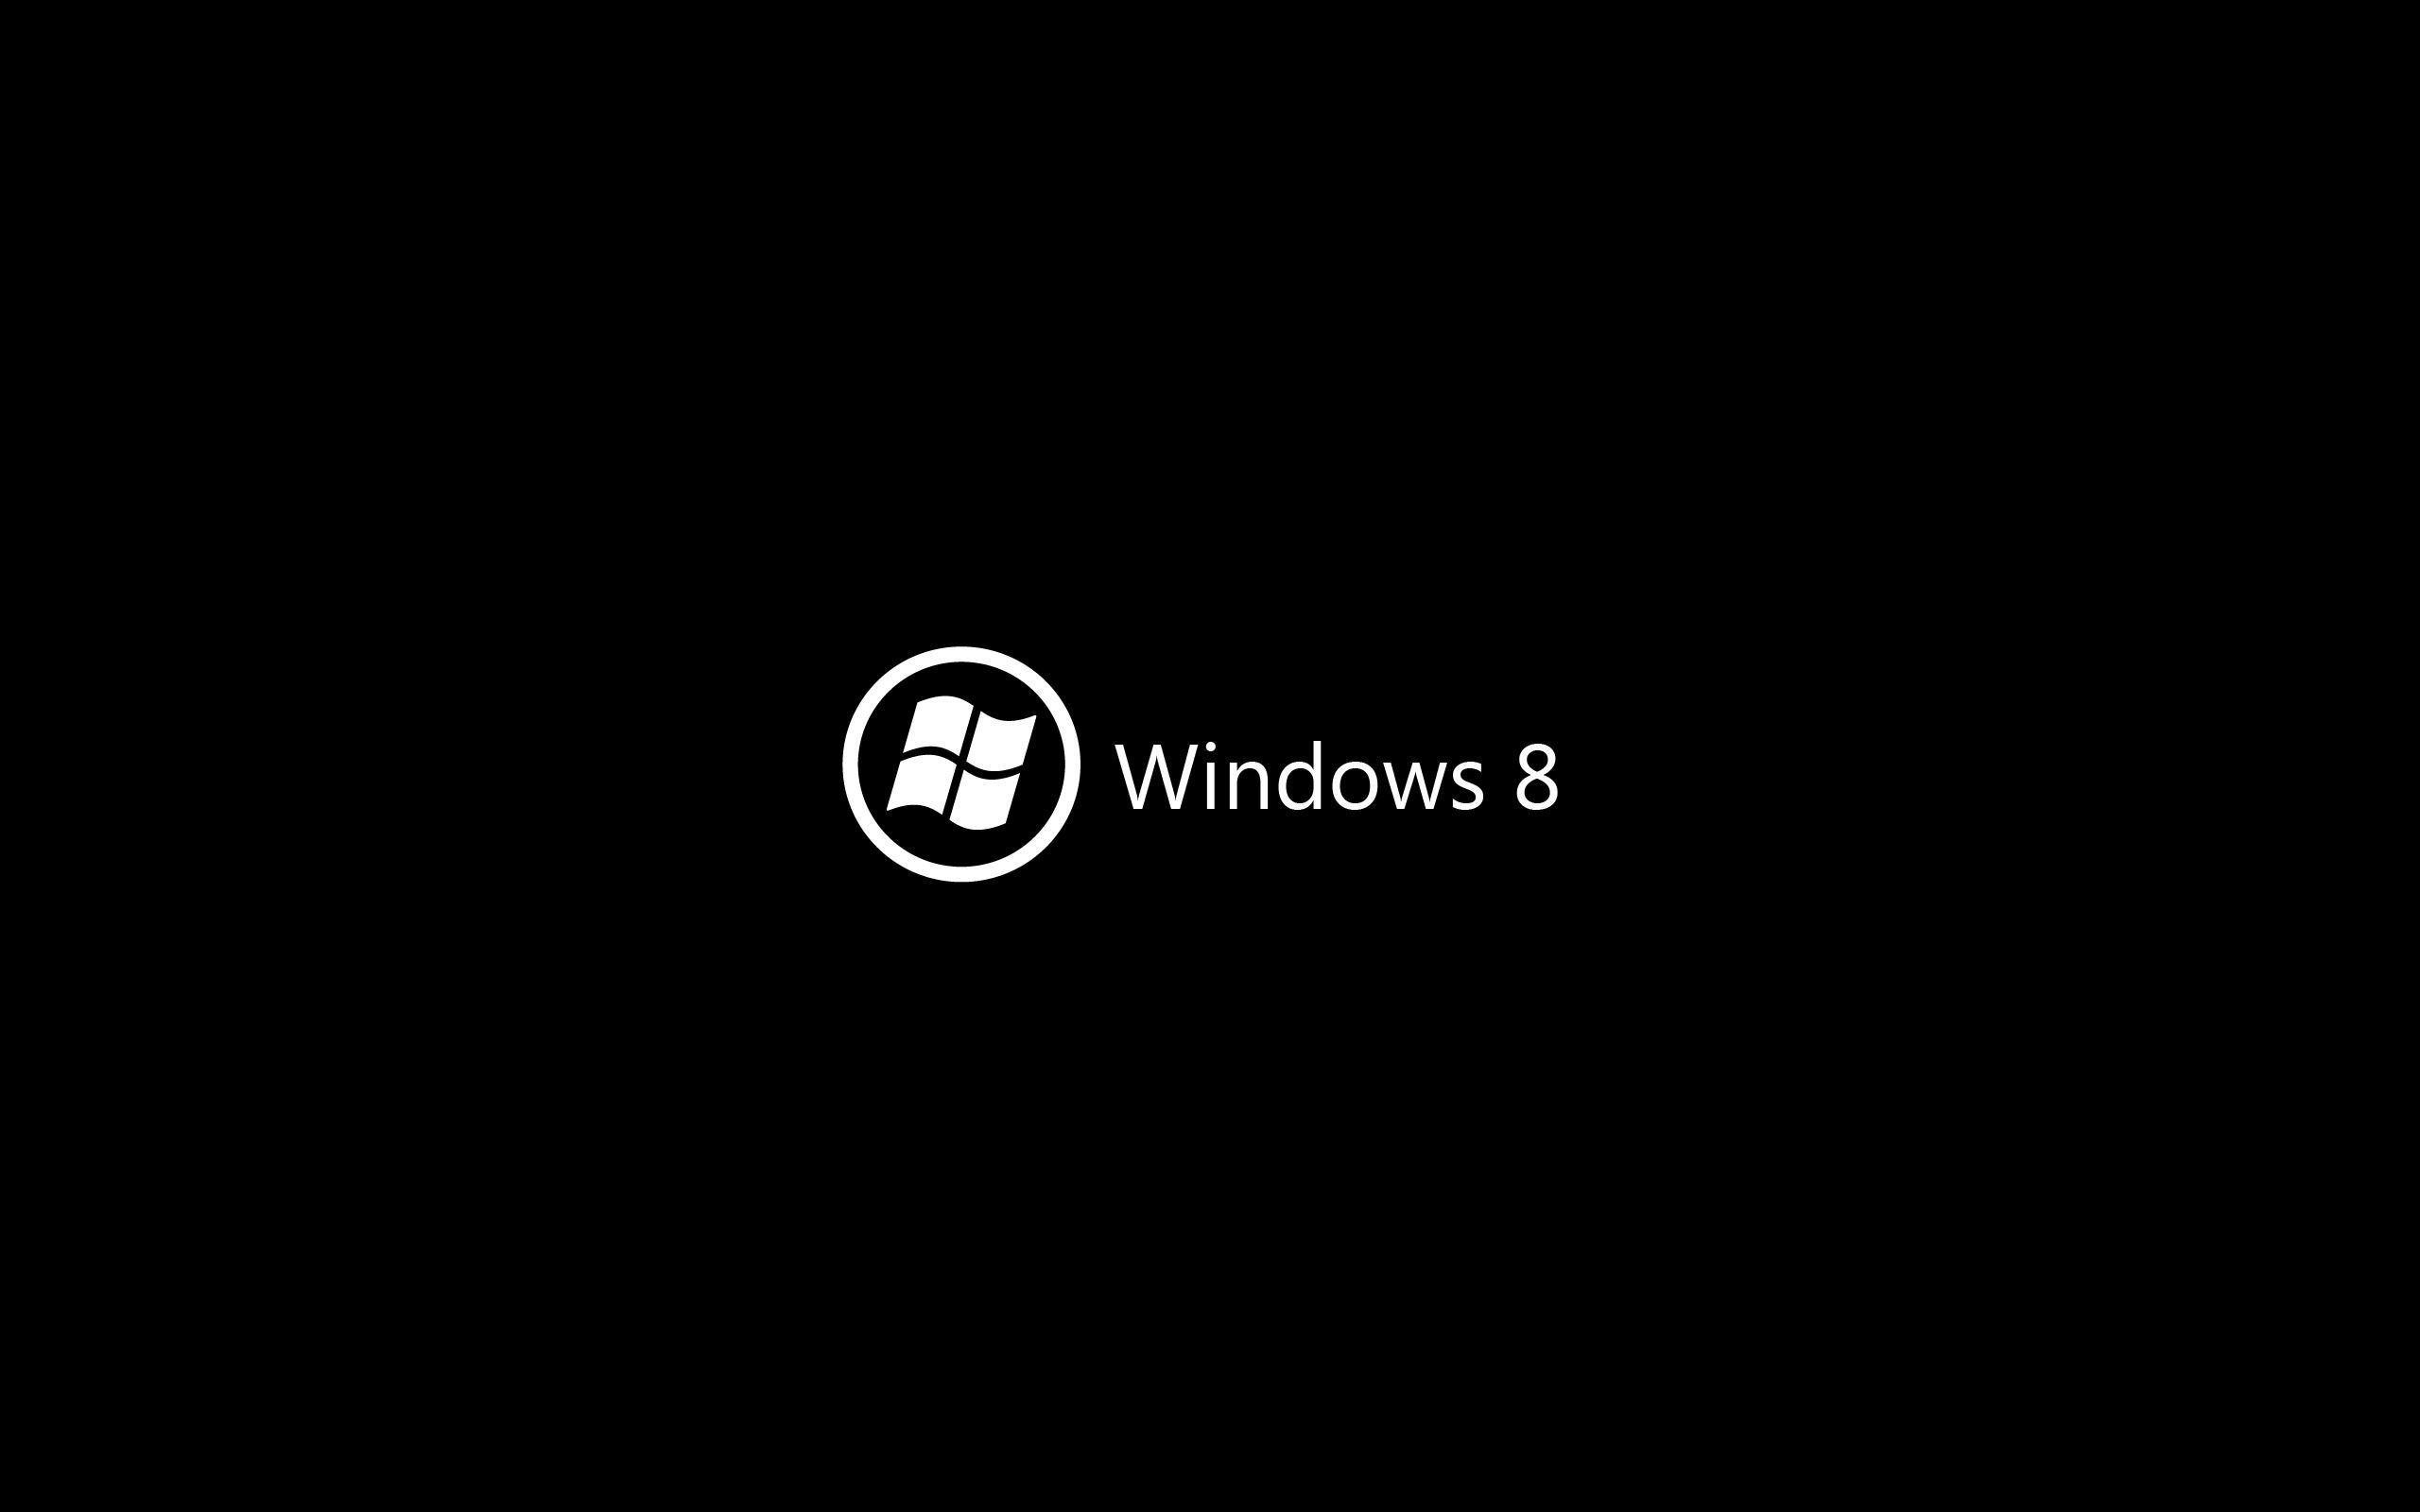 Top Official Wallpaper for Microsoft Windows 8 Part 2. Windows